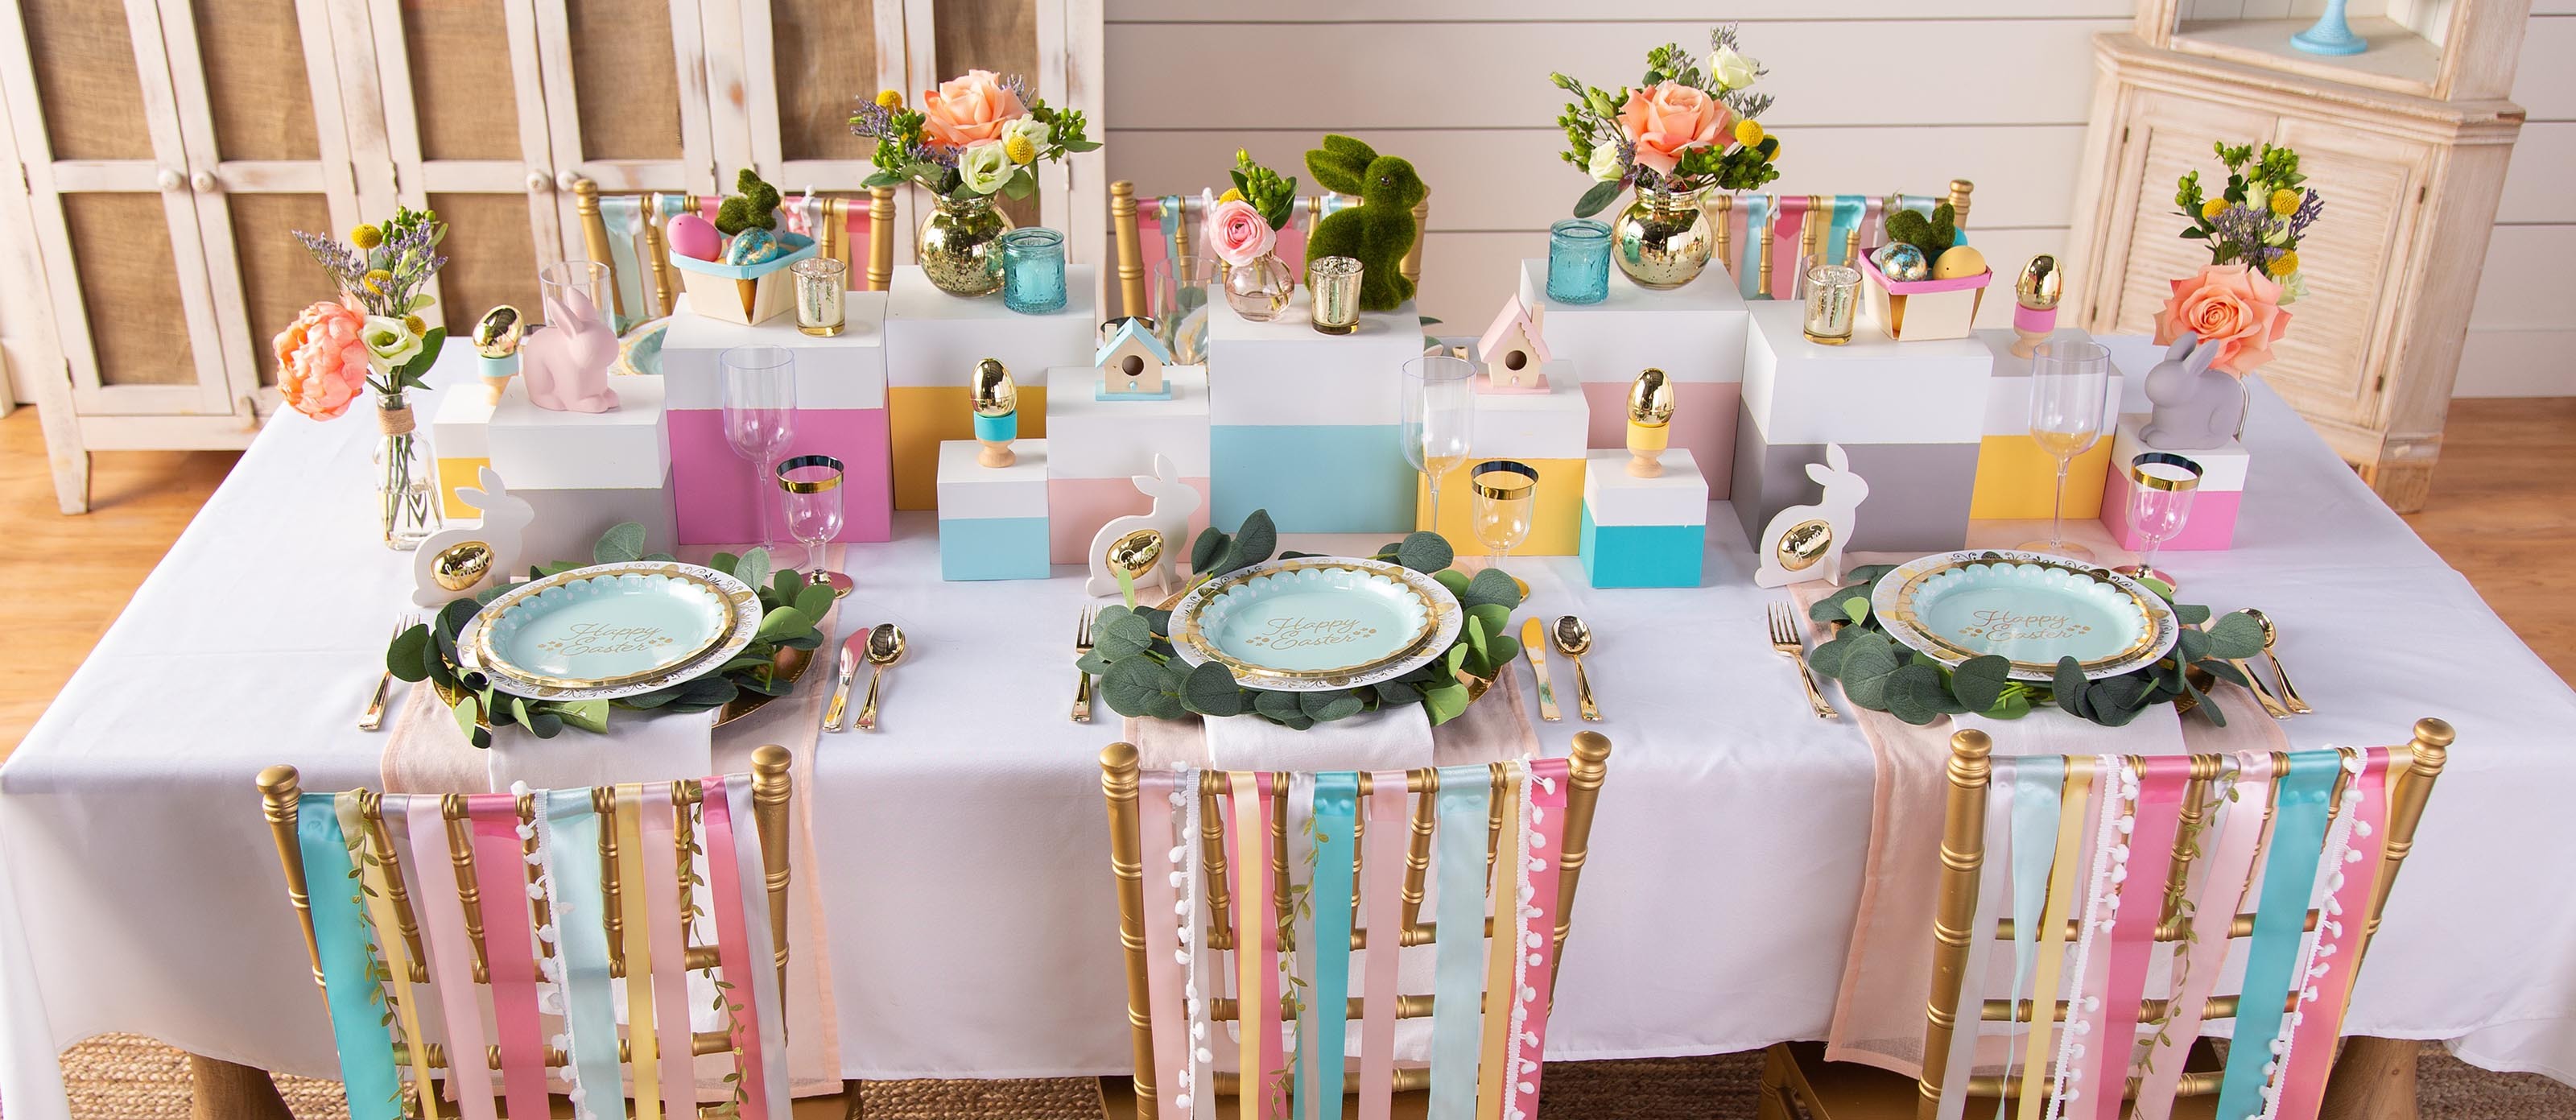 30+ table decorations easter for a Joyful Celebration